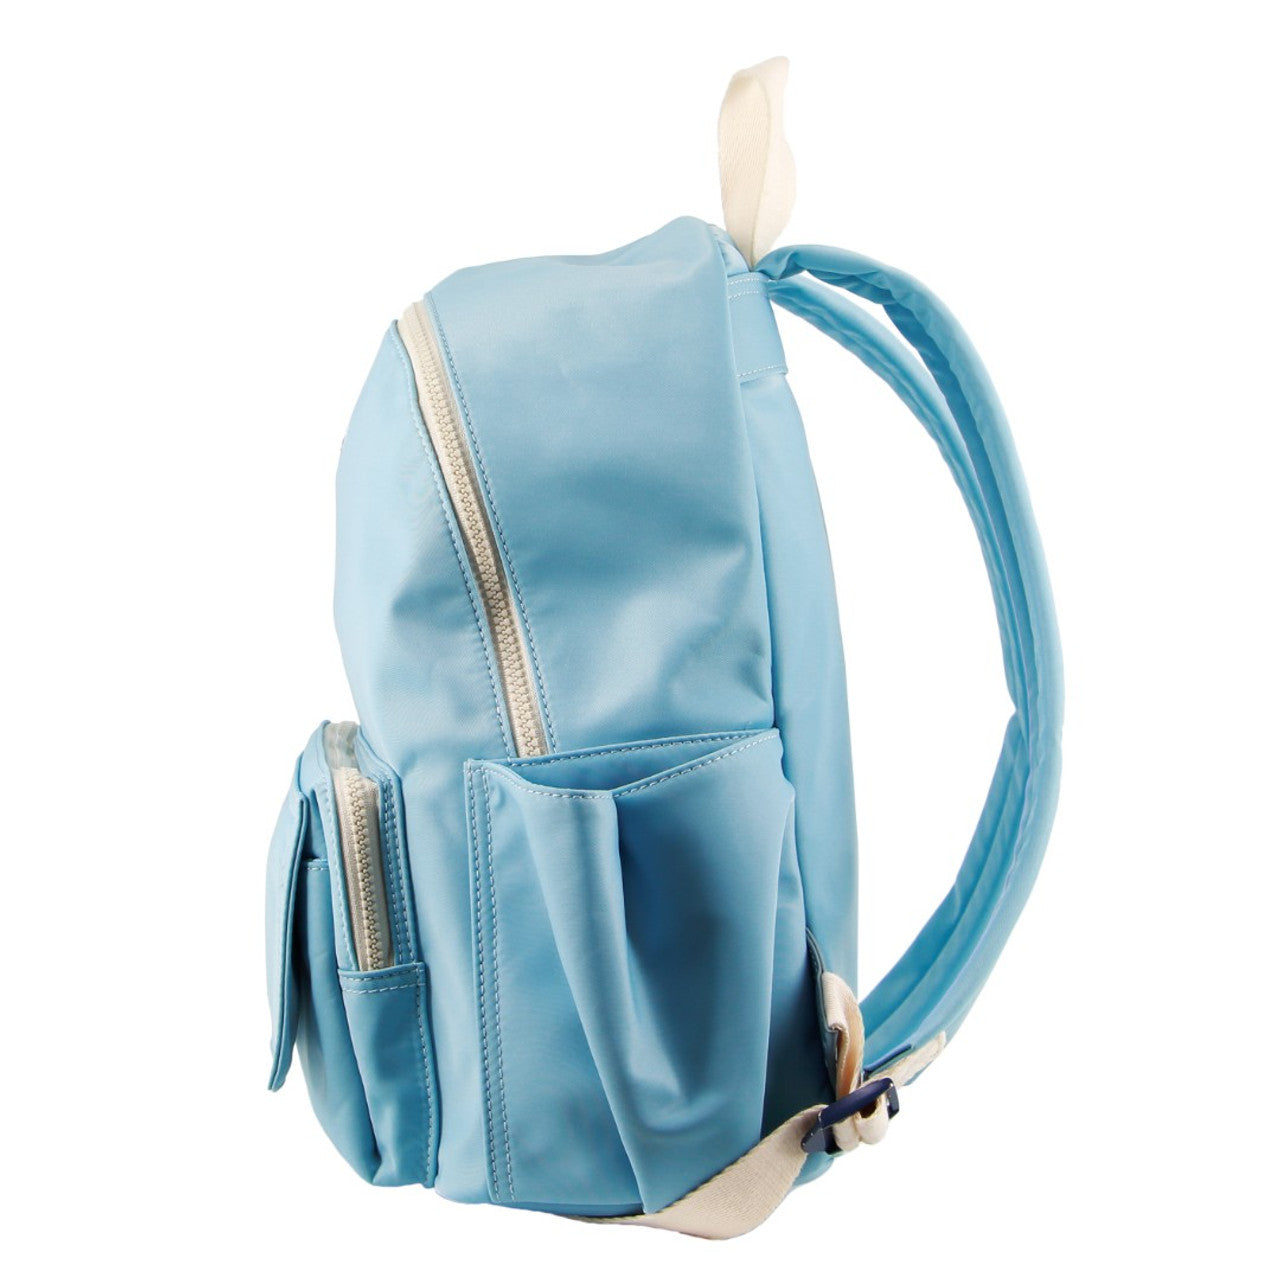 GAP - 11 Nylon Backpack front pocket - Light Blue-2